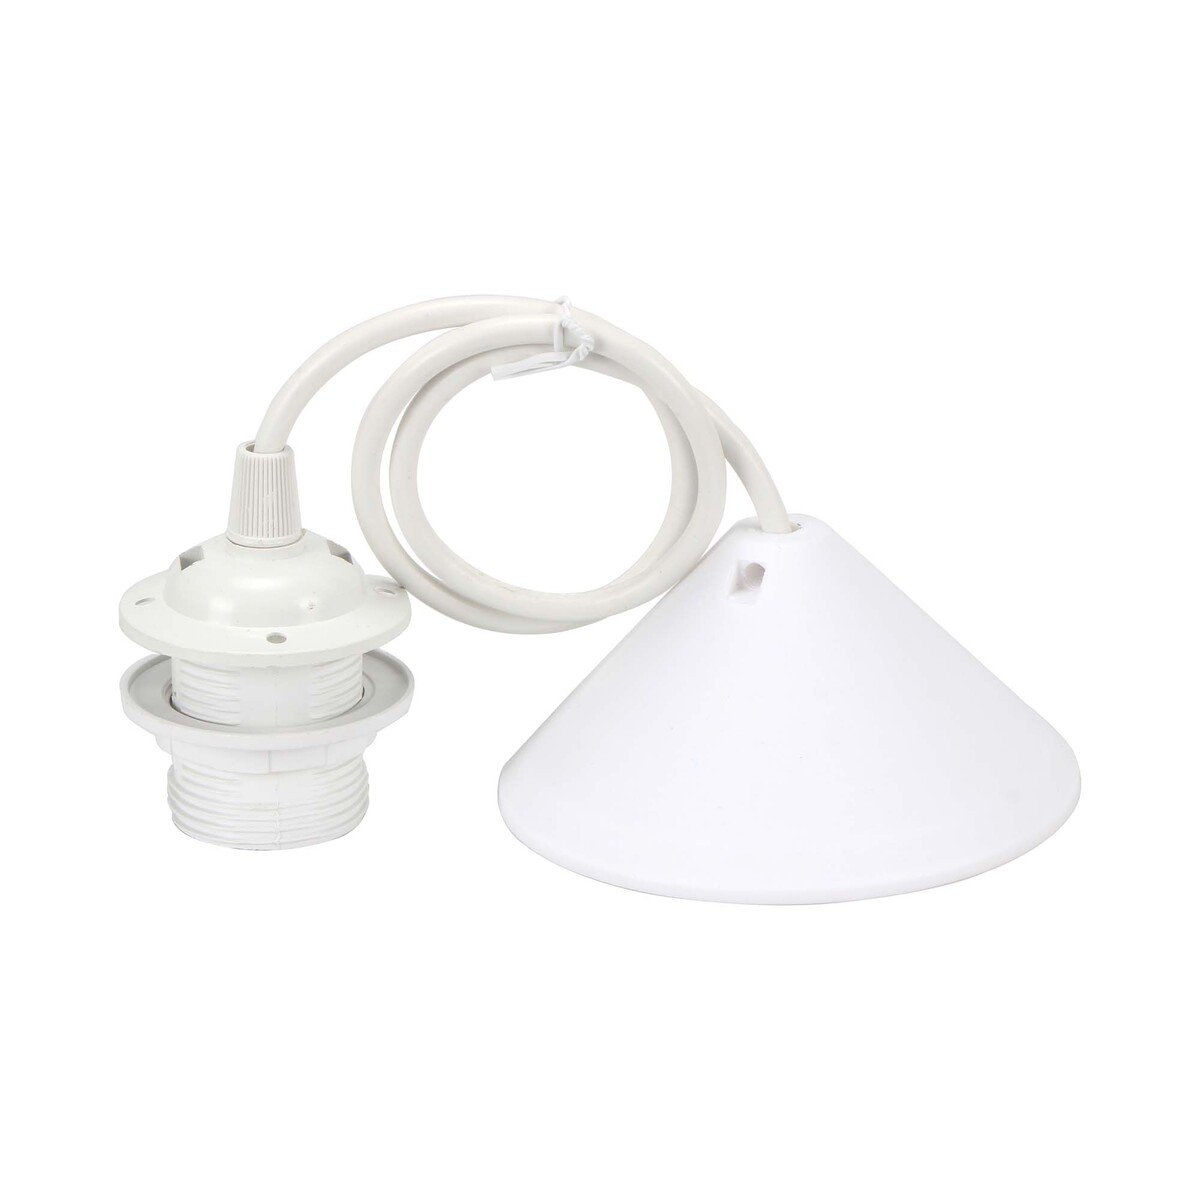 Maple Leaf Lamp Holder Cord Set 1.5M P6013 Assorted Color